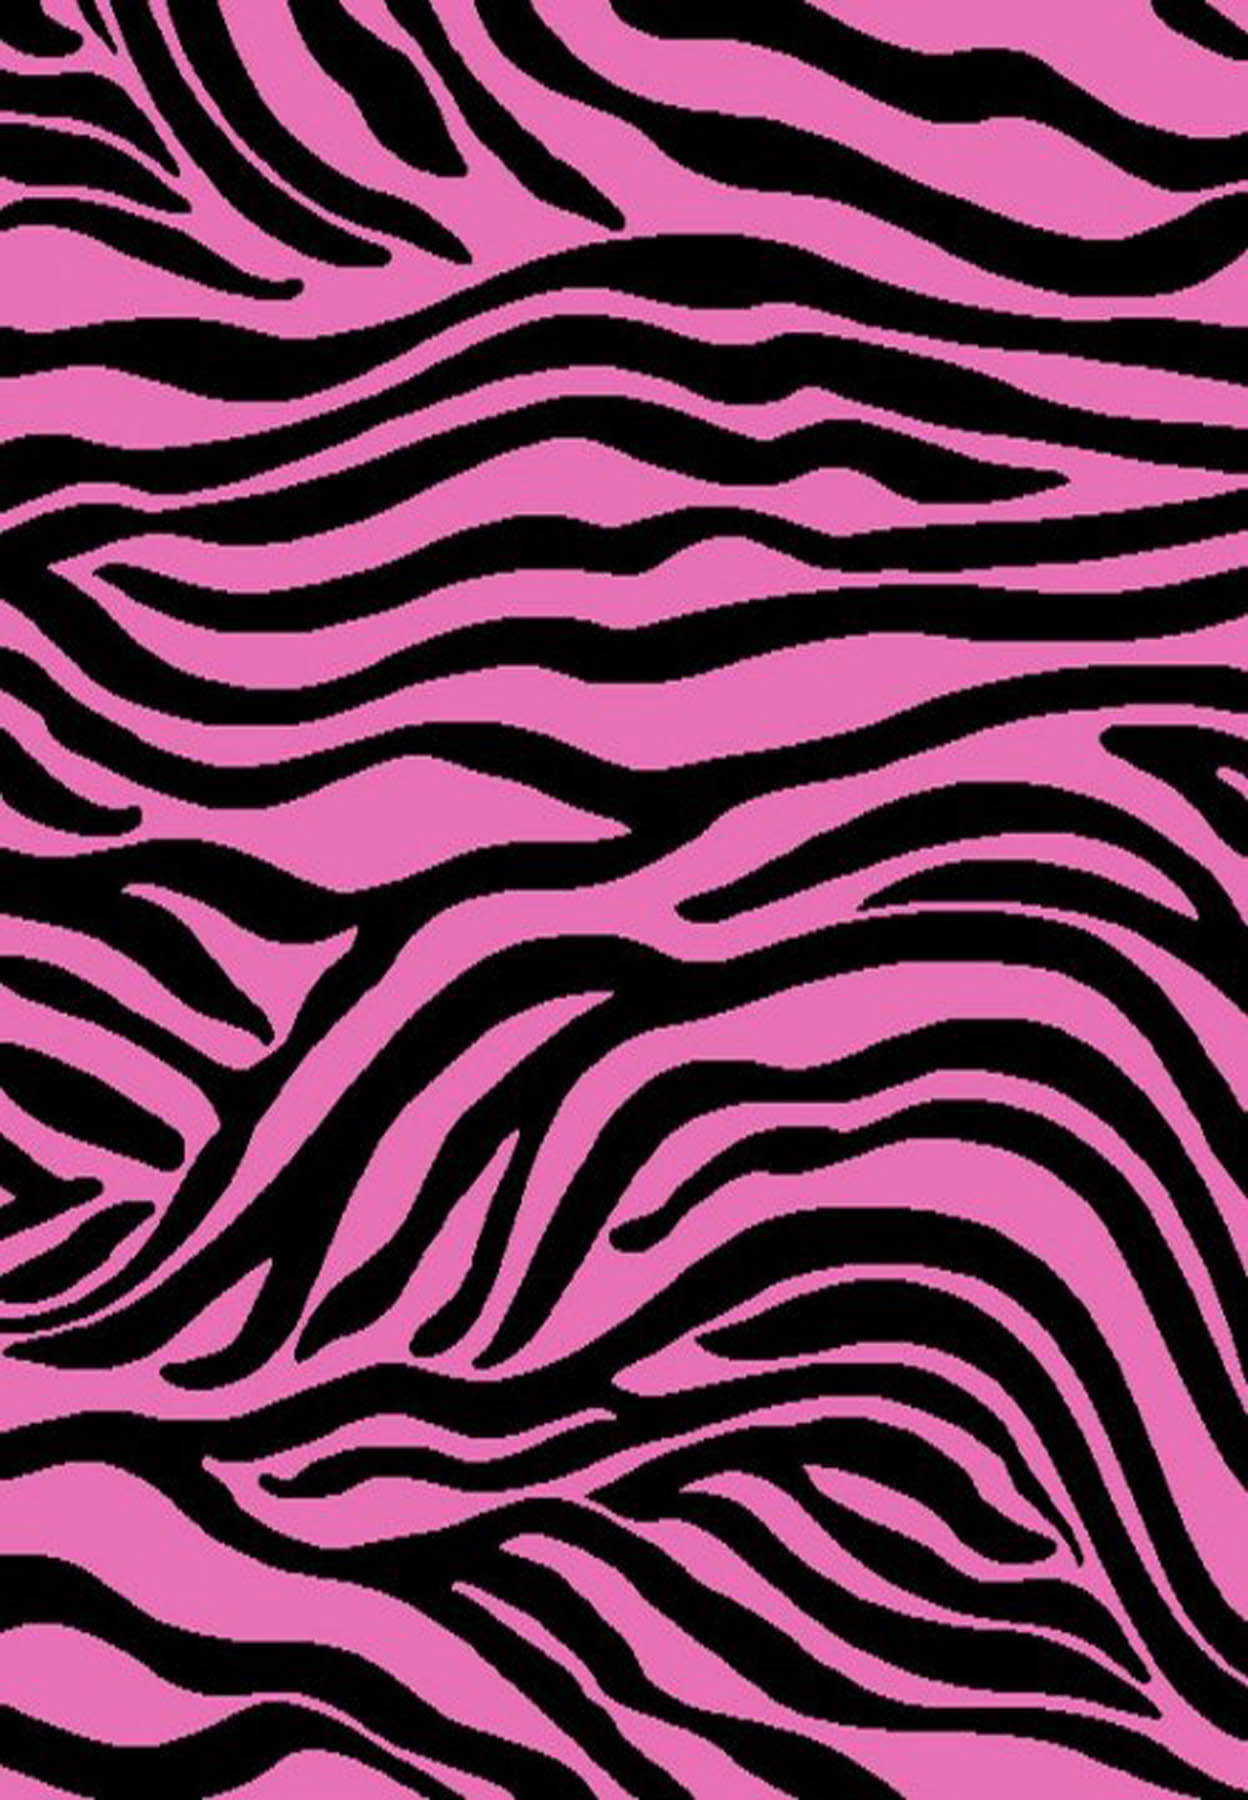 Pink and black zebra pattern